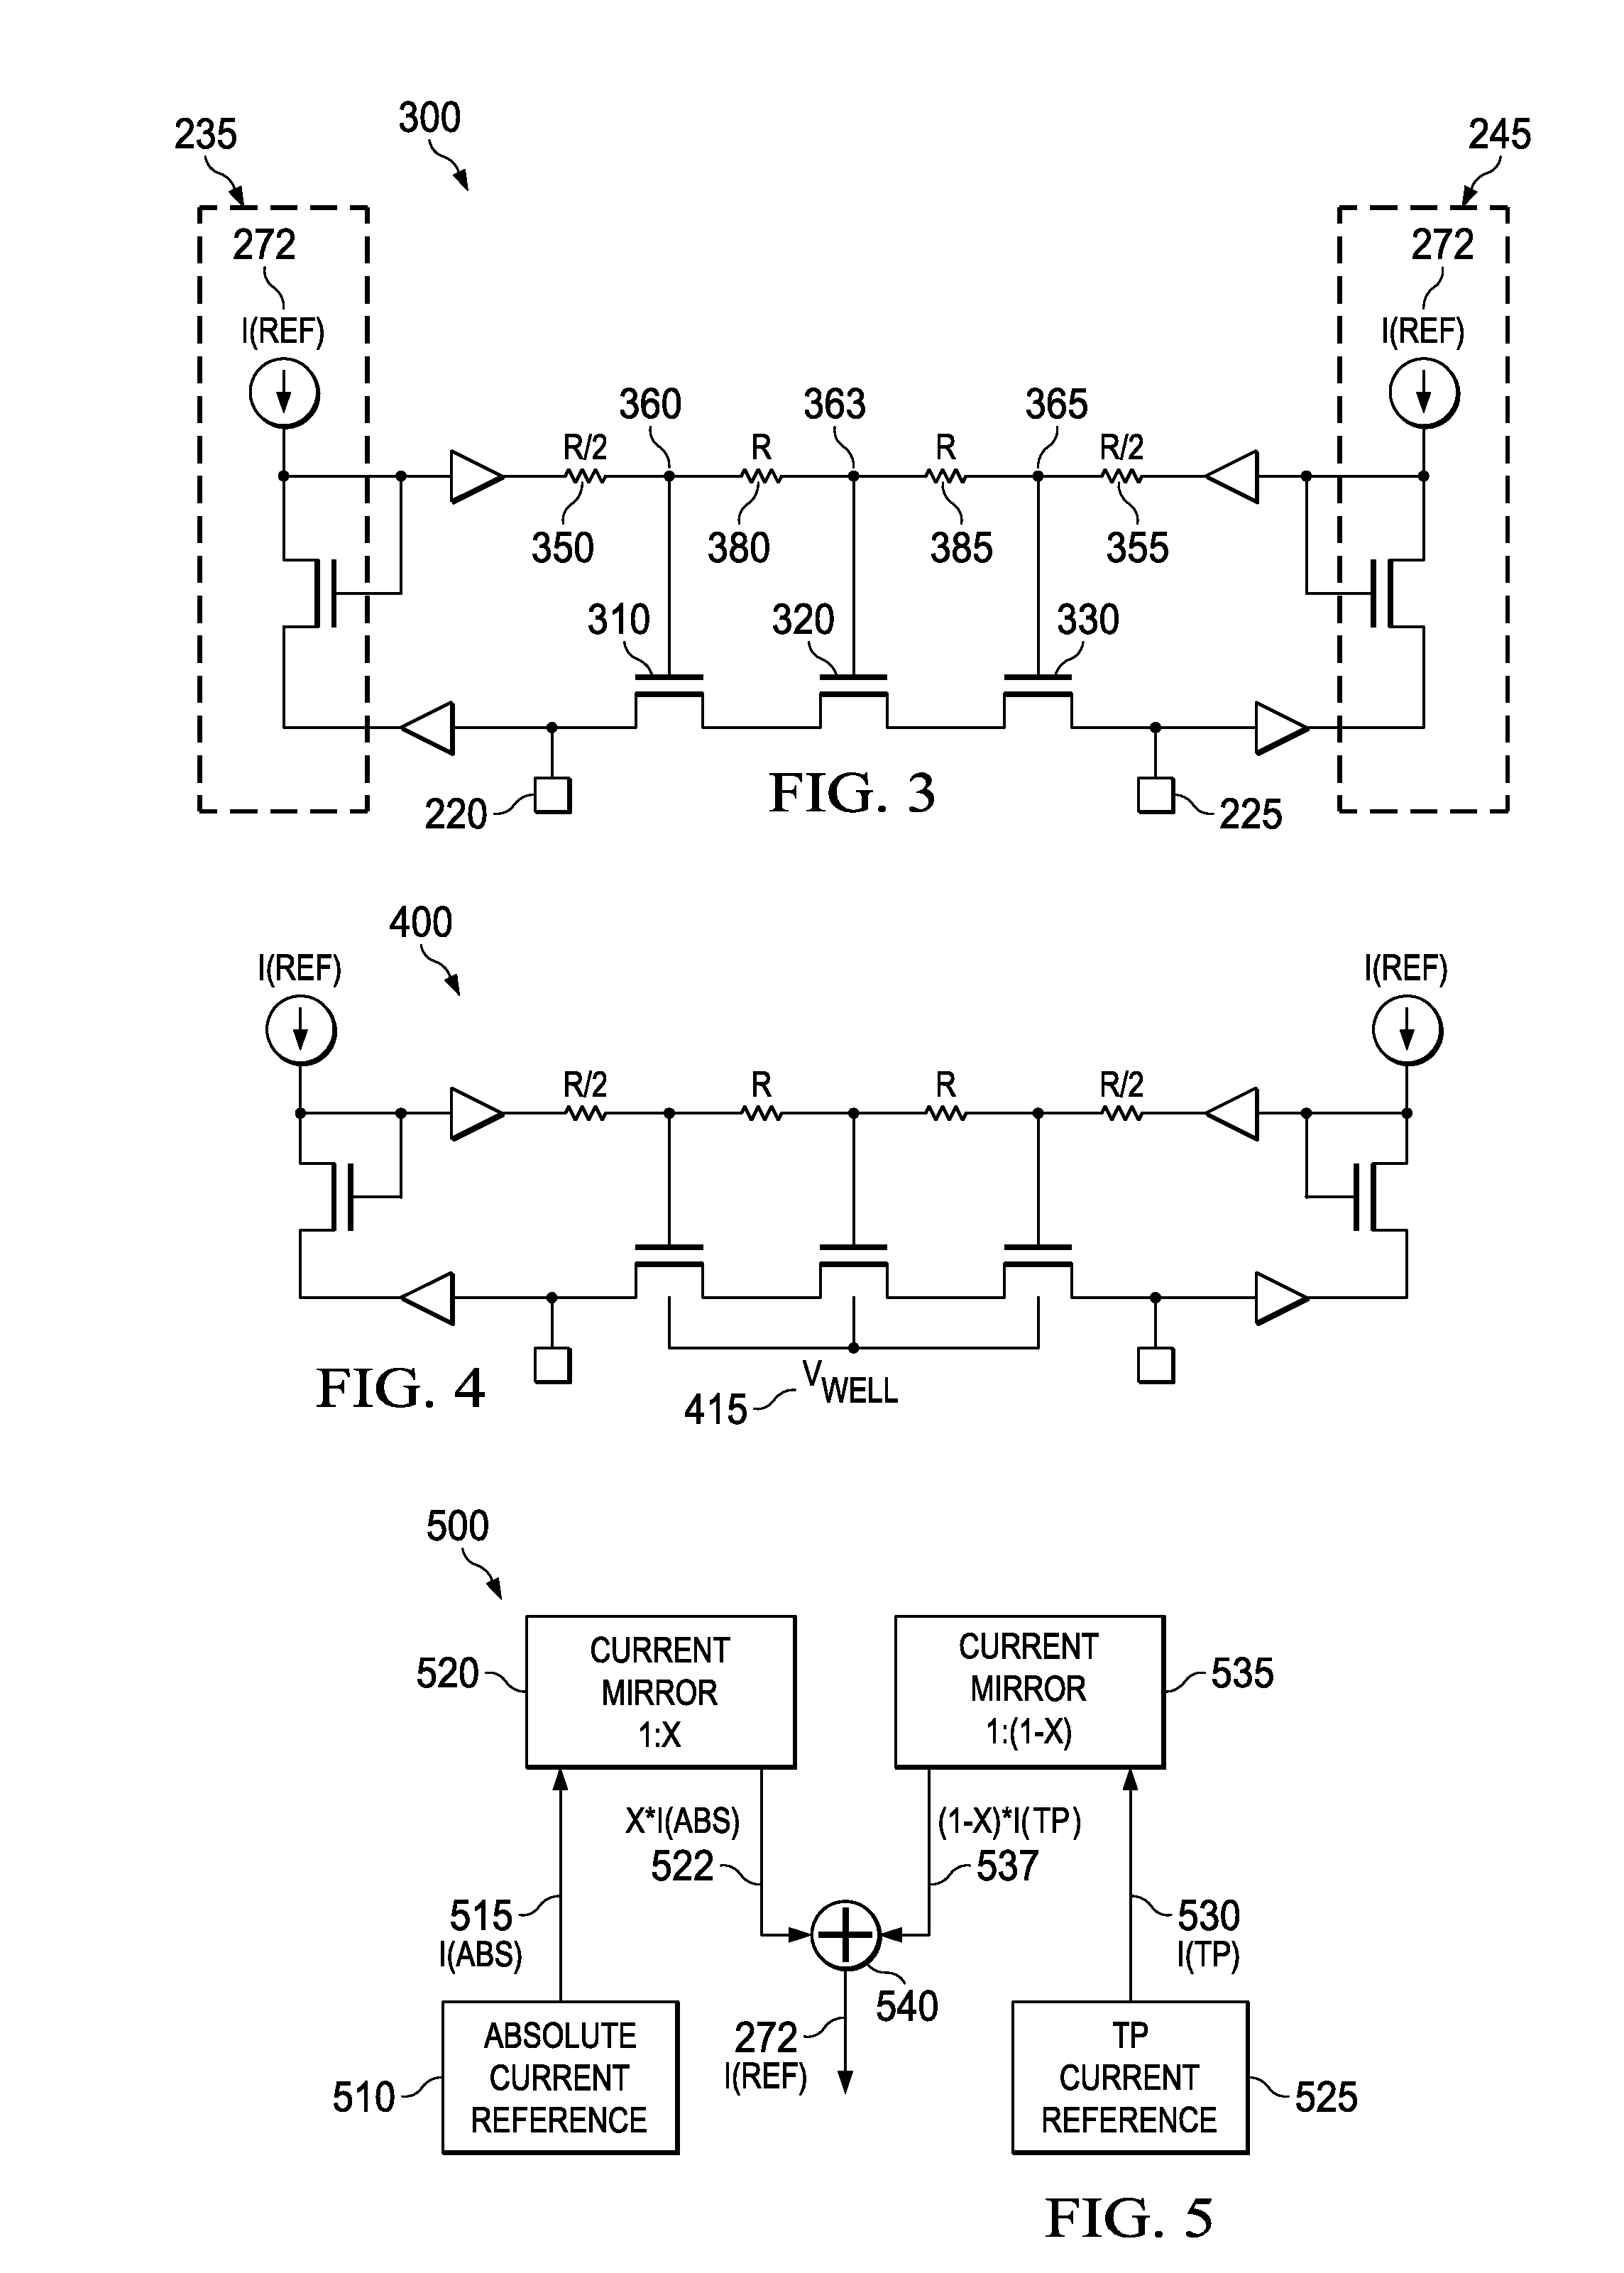 MOS resistor apparatus and methods